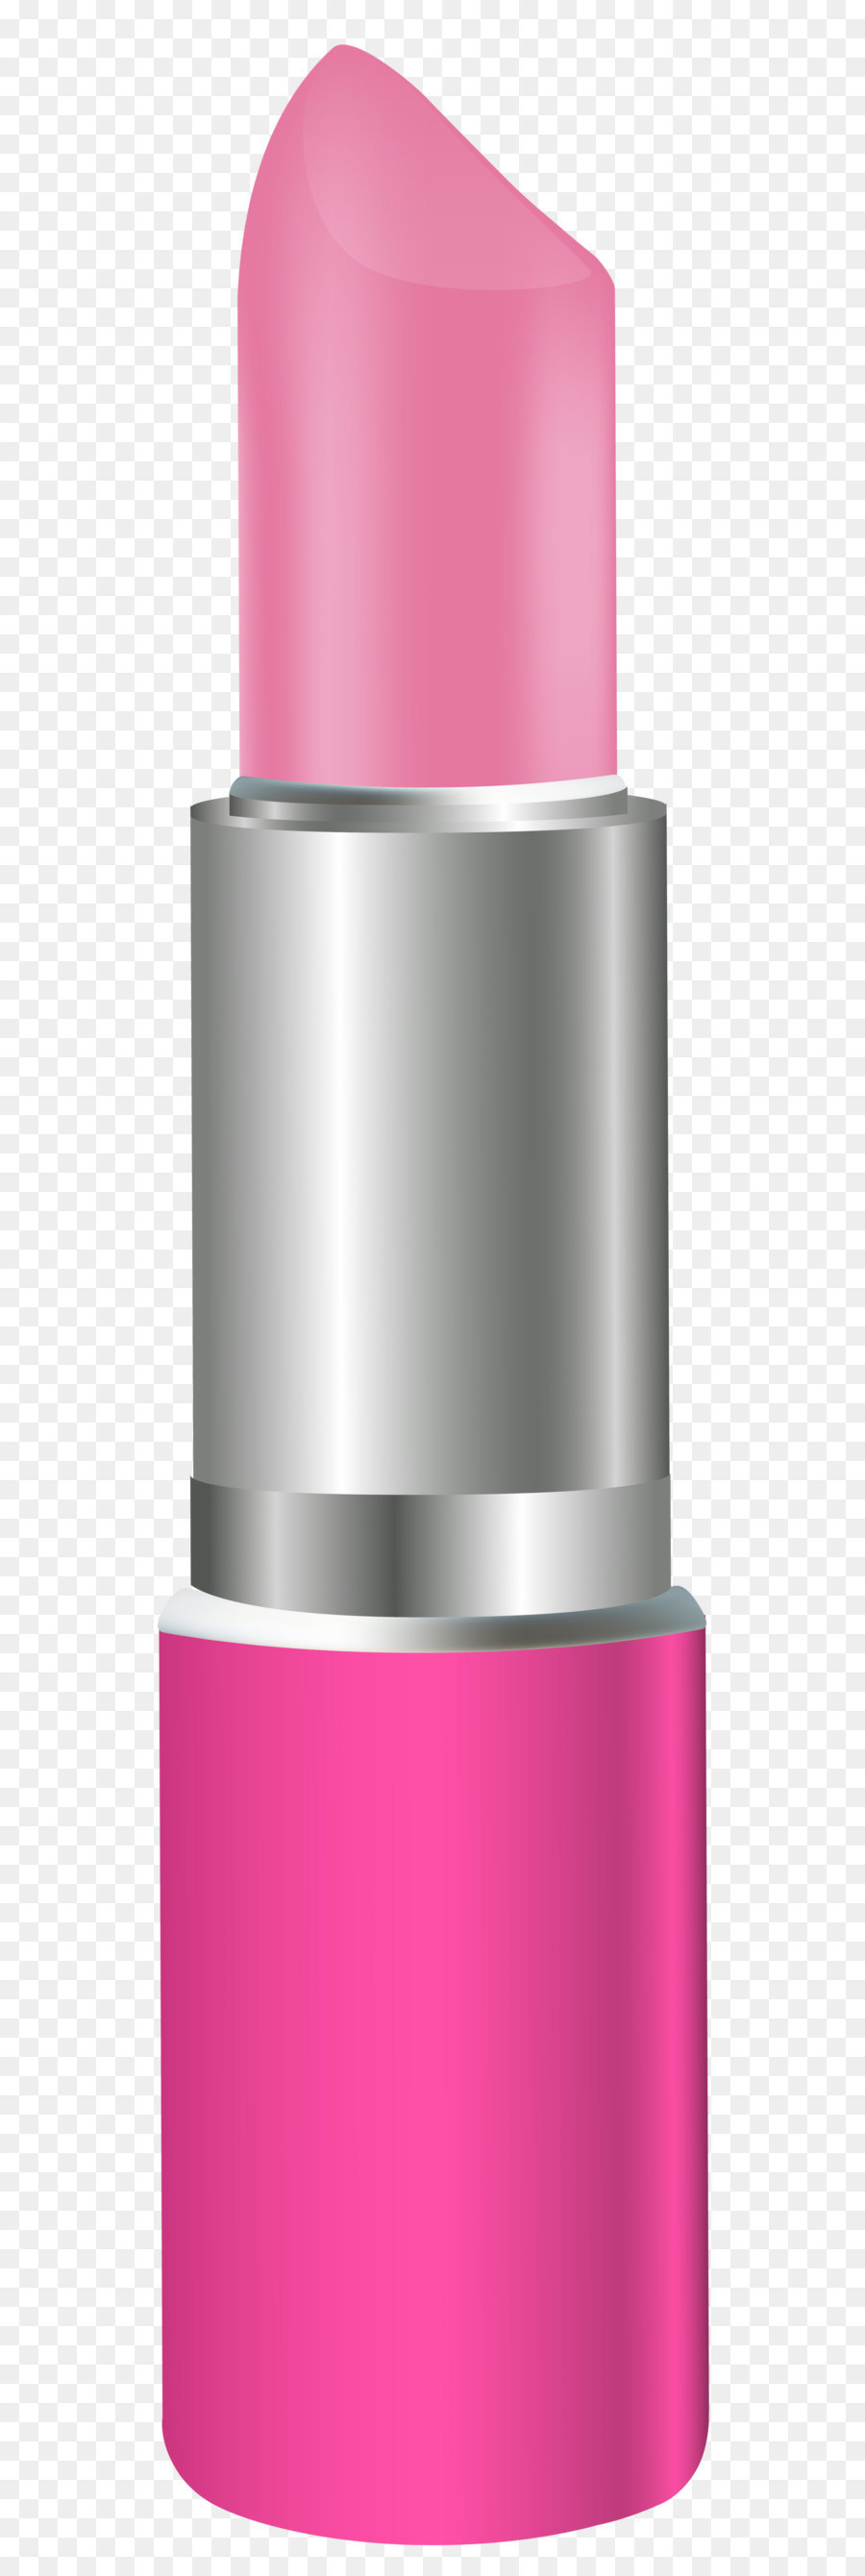 Lipstick Cosmetics Clip art - Lipstick Transparent PNG Clip Art Image png download - 2424*9983 - Free Transparent Lipstick png Download.